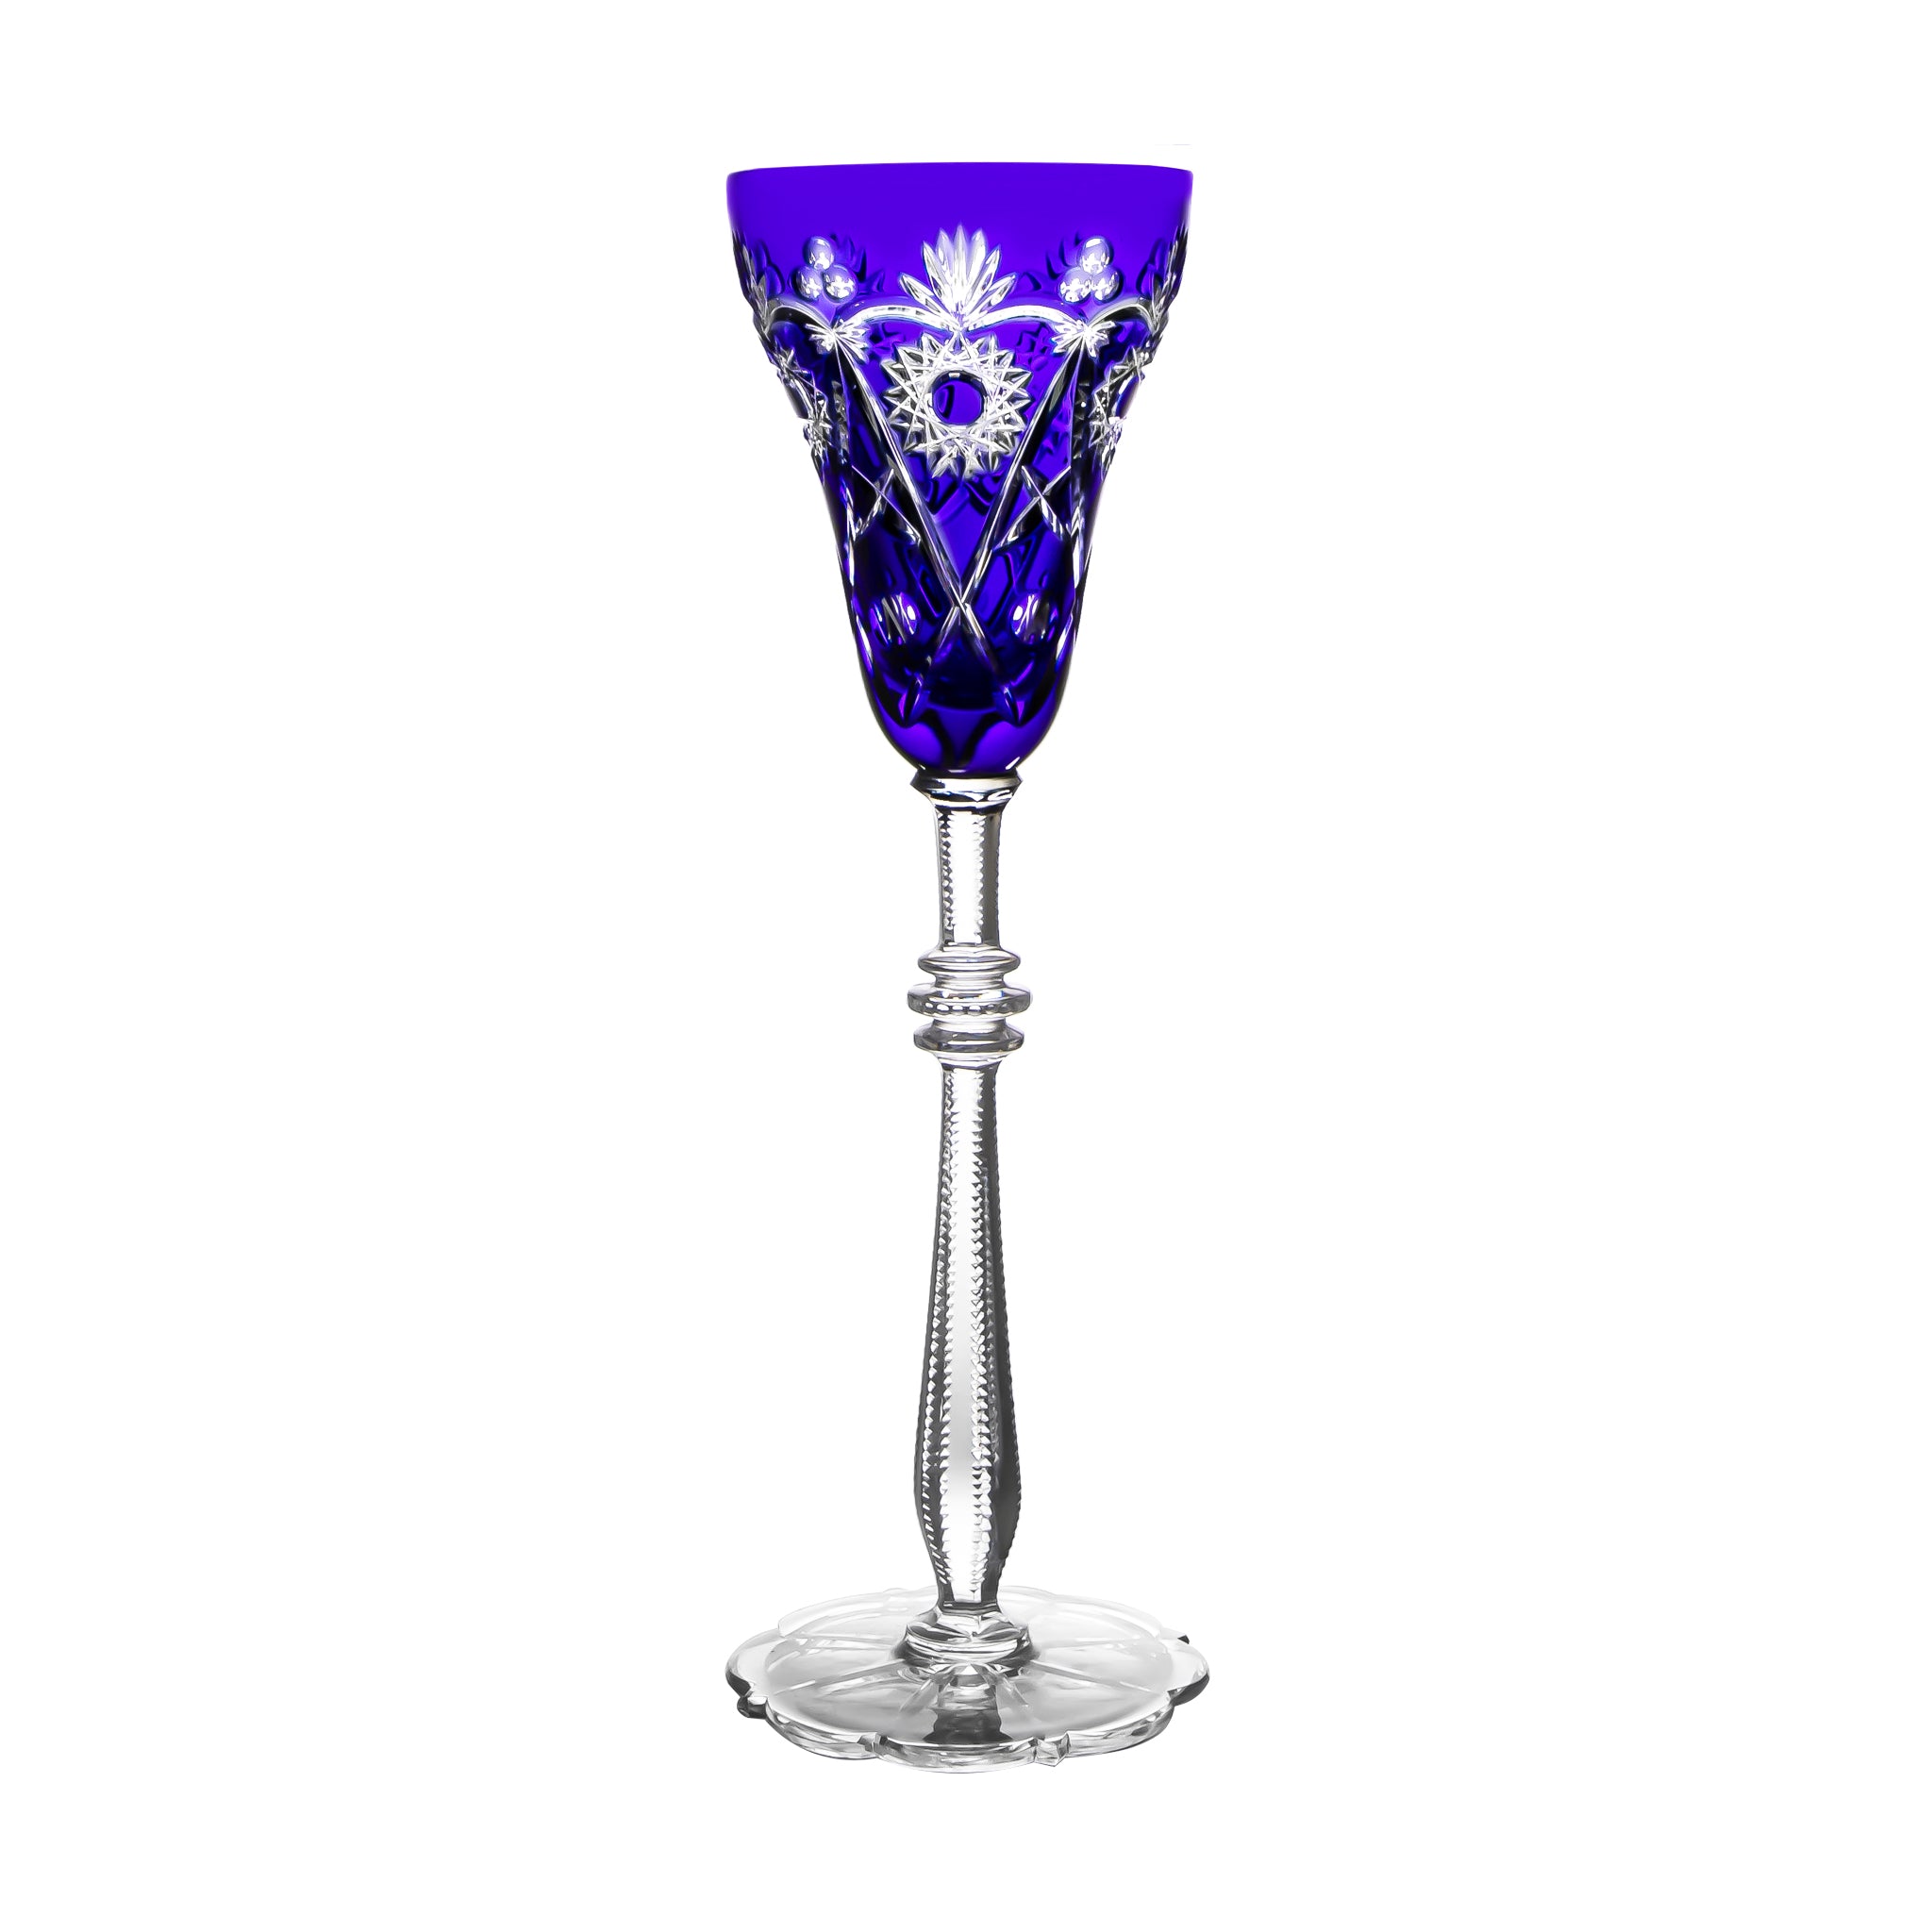 Cristal de Paris New York Blue Large Wine Glass - Ajka Crystal